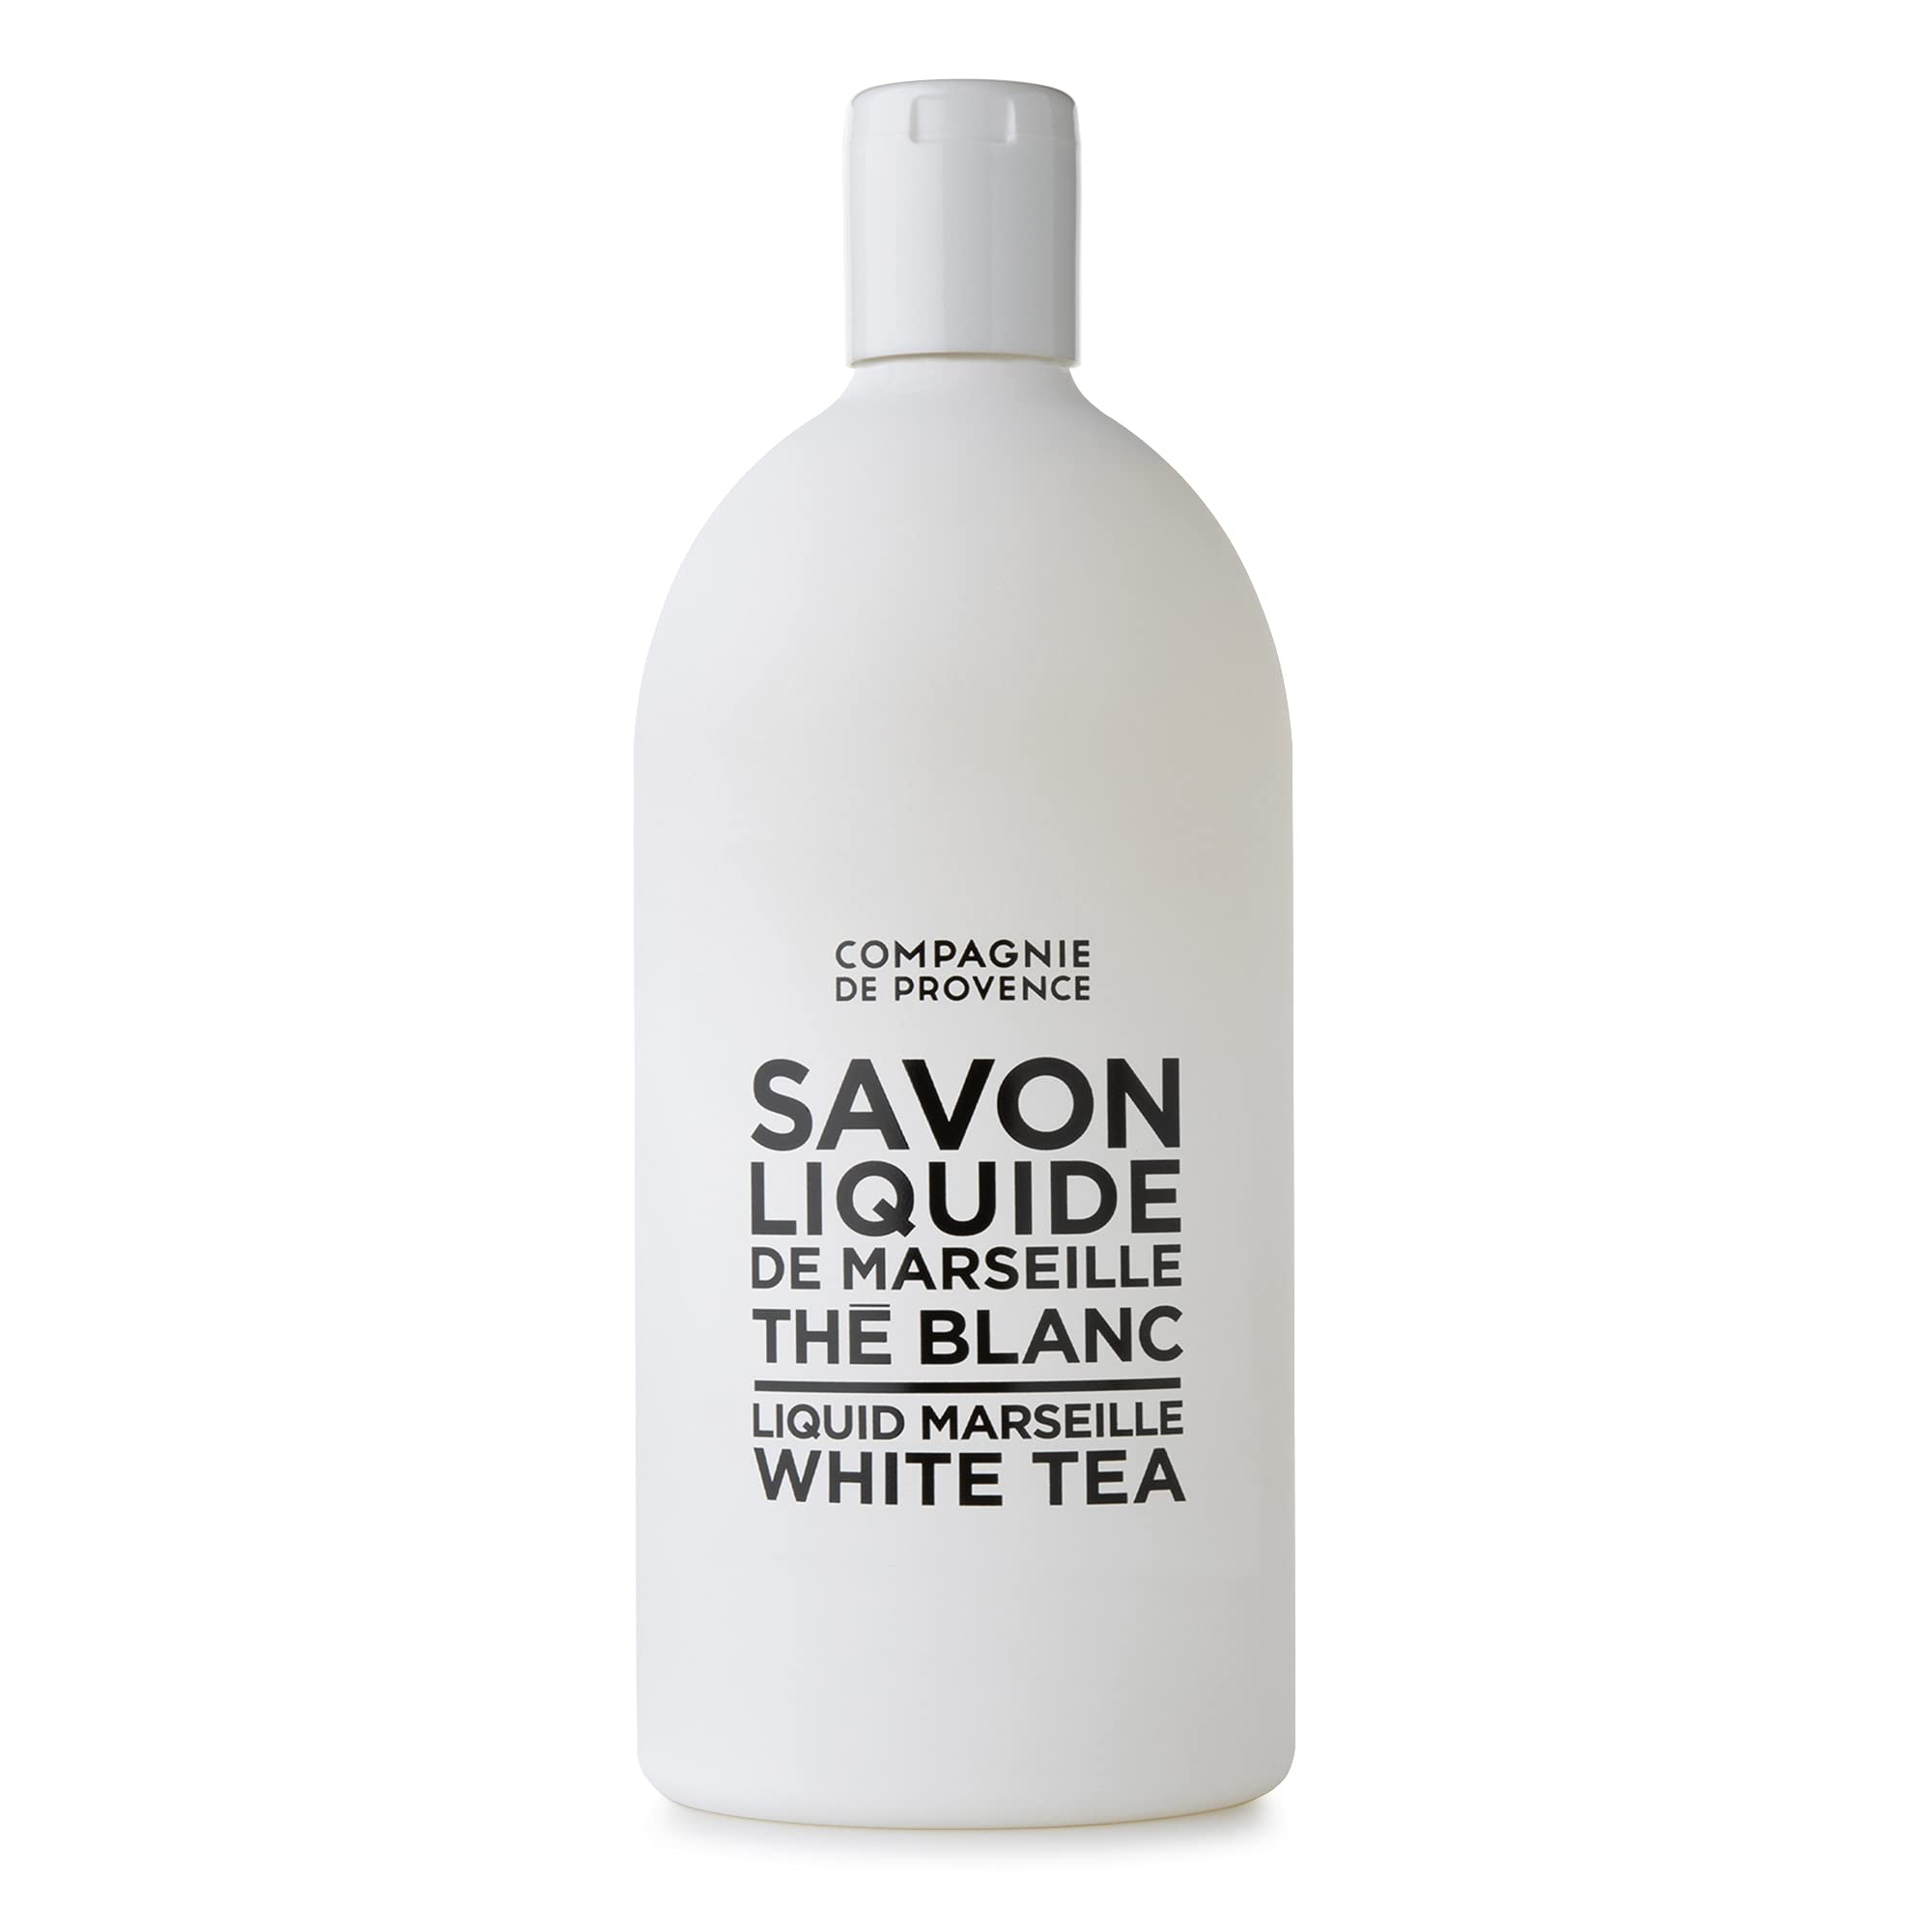 La Compagnie de Prov Compagnie de Provence Savon de Marseille Extra Pure Liquid Soap - White Tea - 33.8 fl oz Plastic Bottle Refill